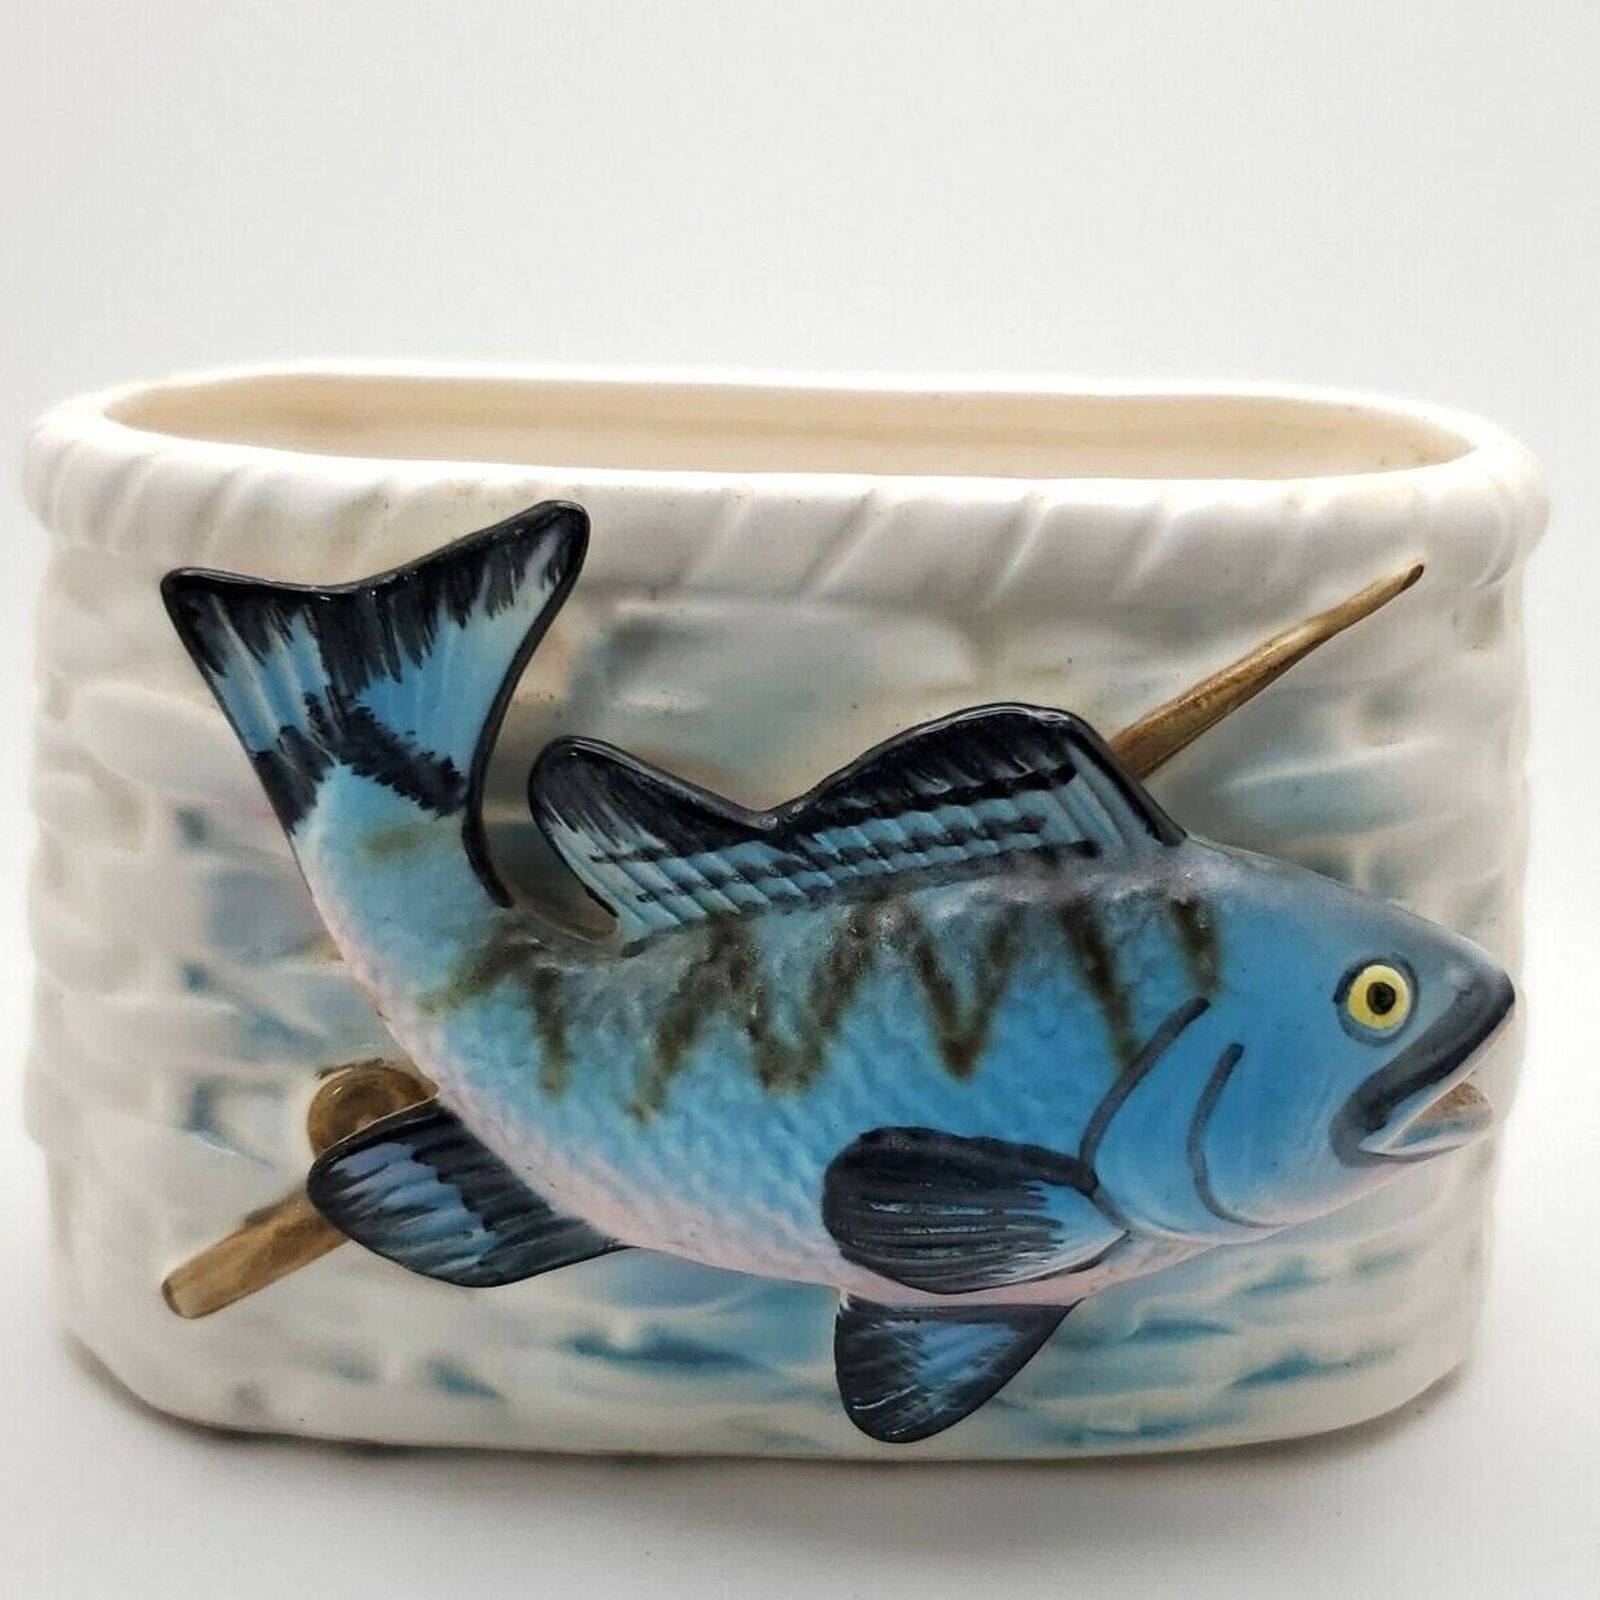 Vintage Napco Creel and Blue Fish Fishing Pole Ceramic Basket Planter